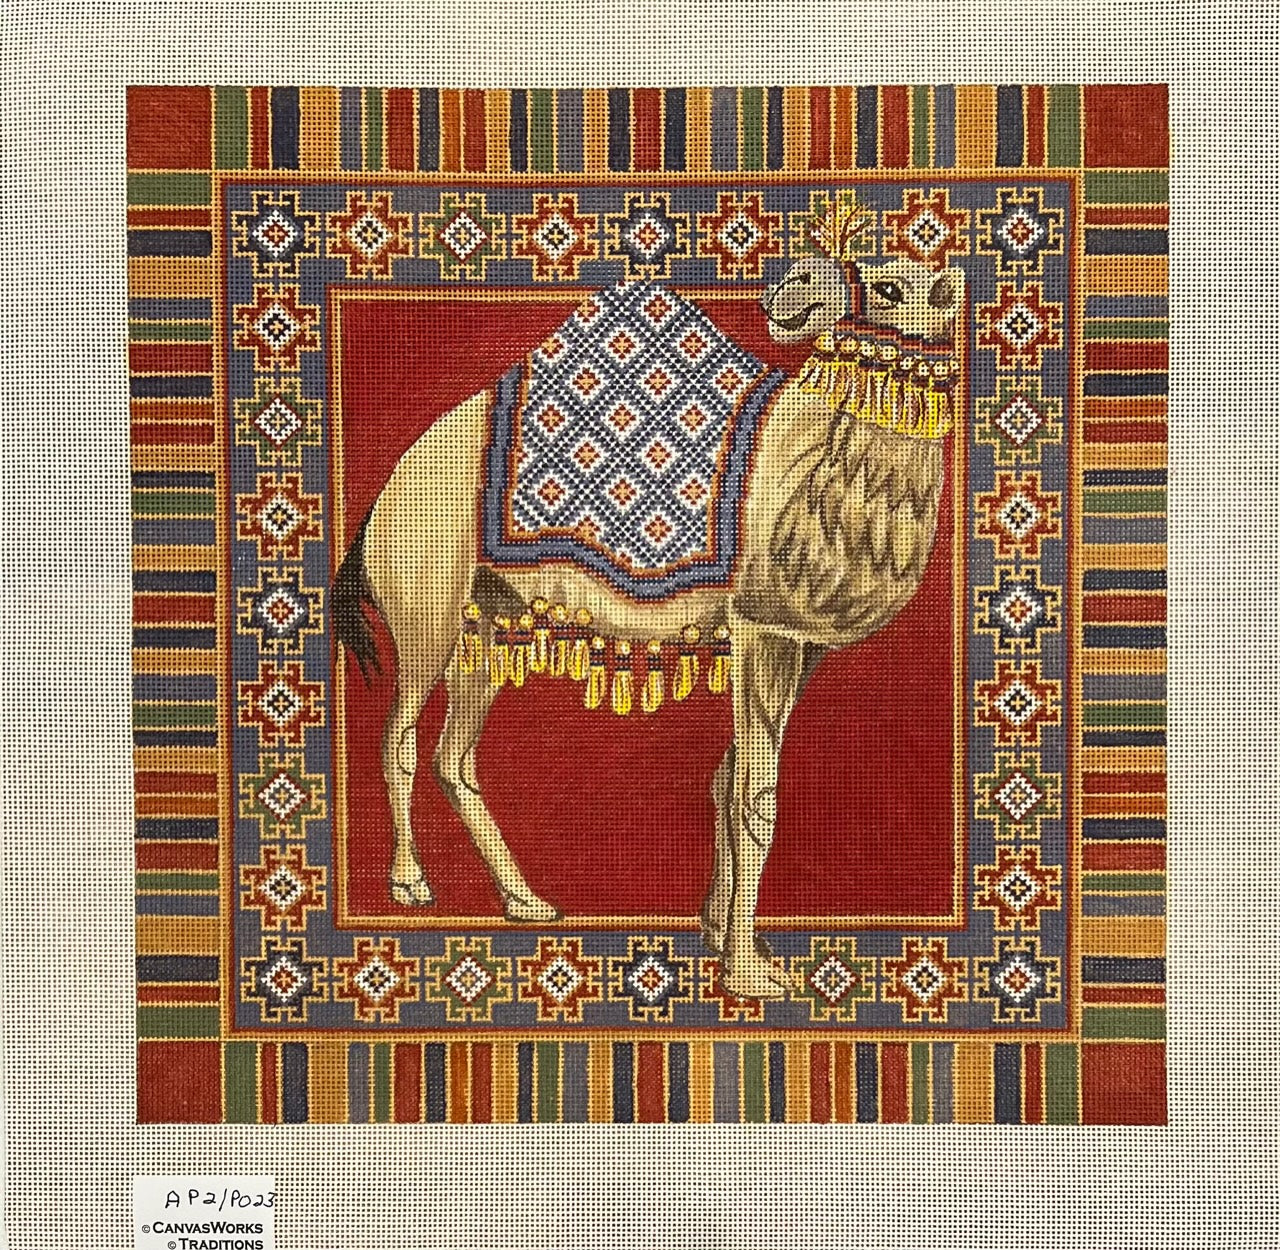 Canvas Works AP 2 PO 23 Sinbad the Camel with Turkoman 2 Border